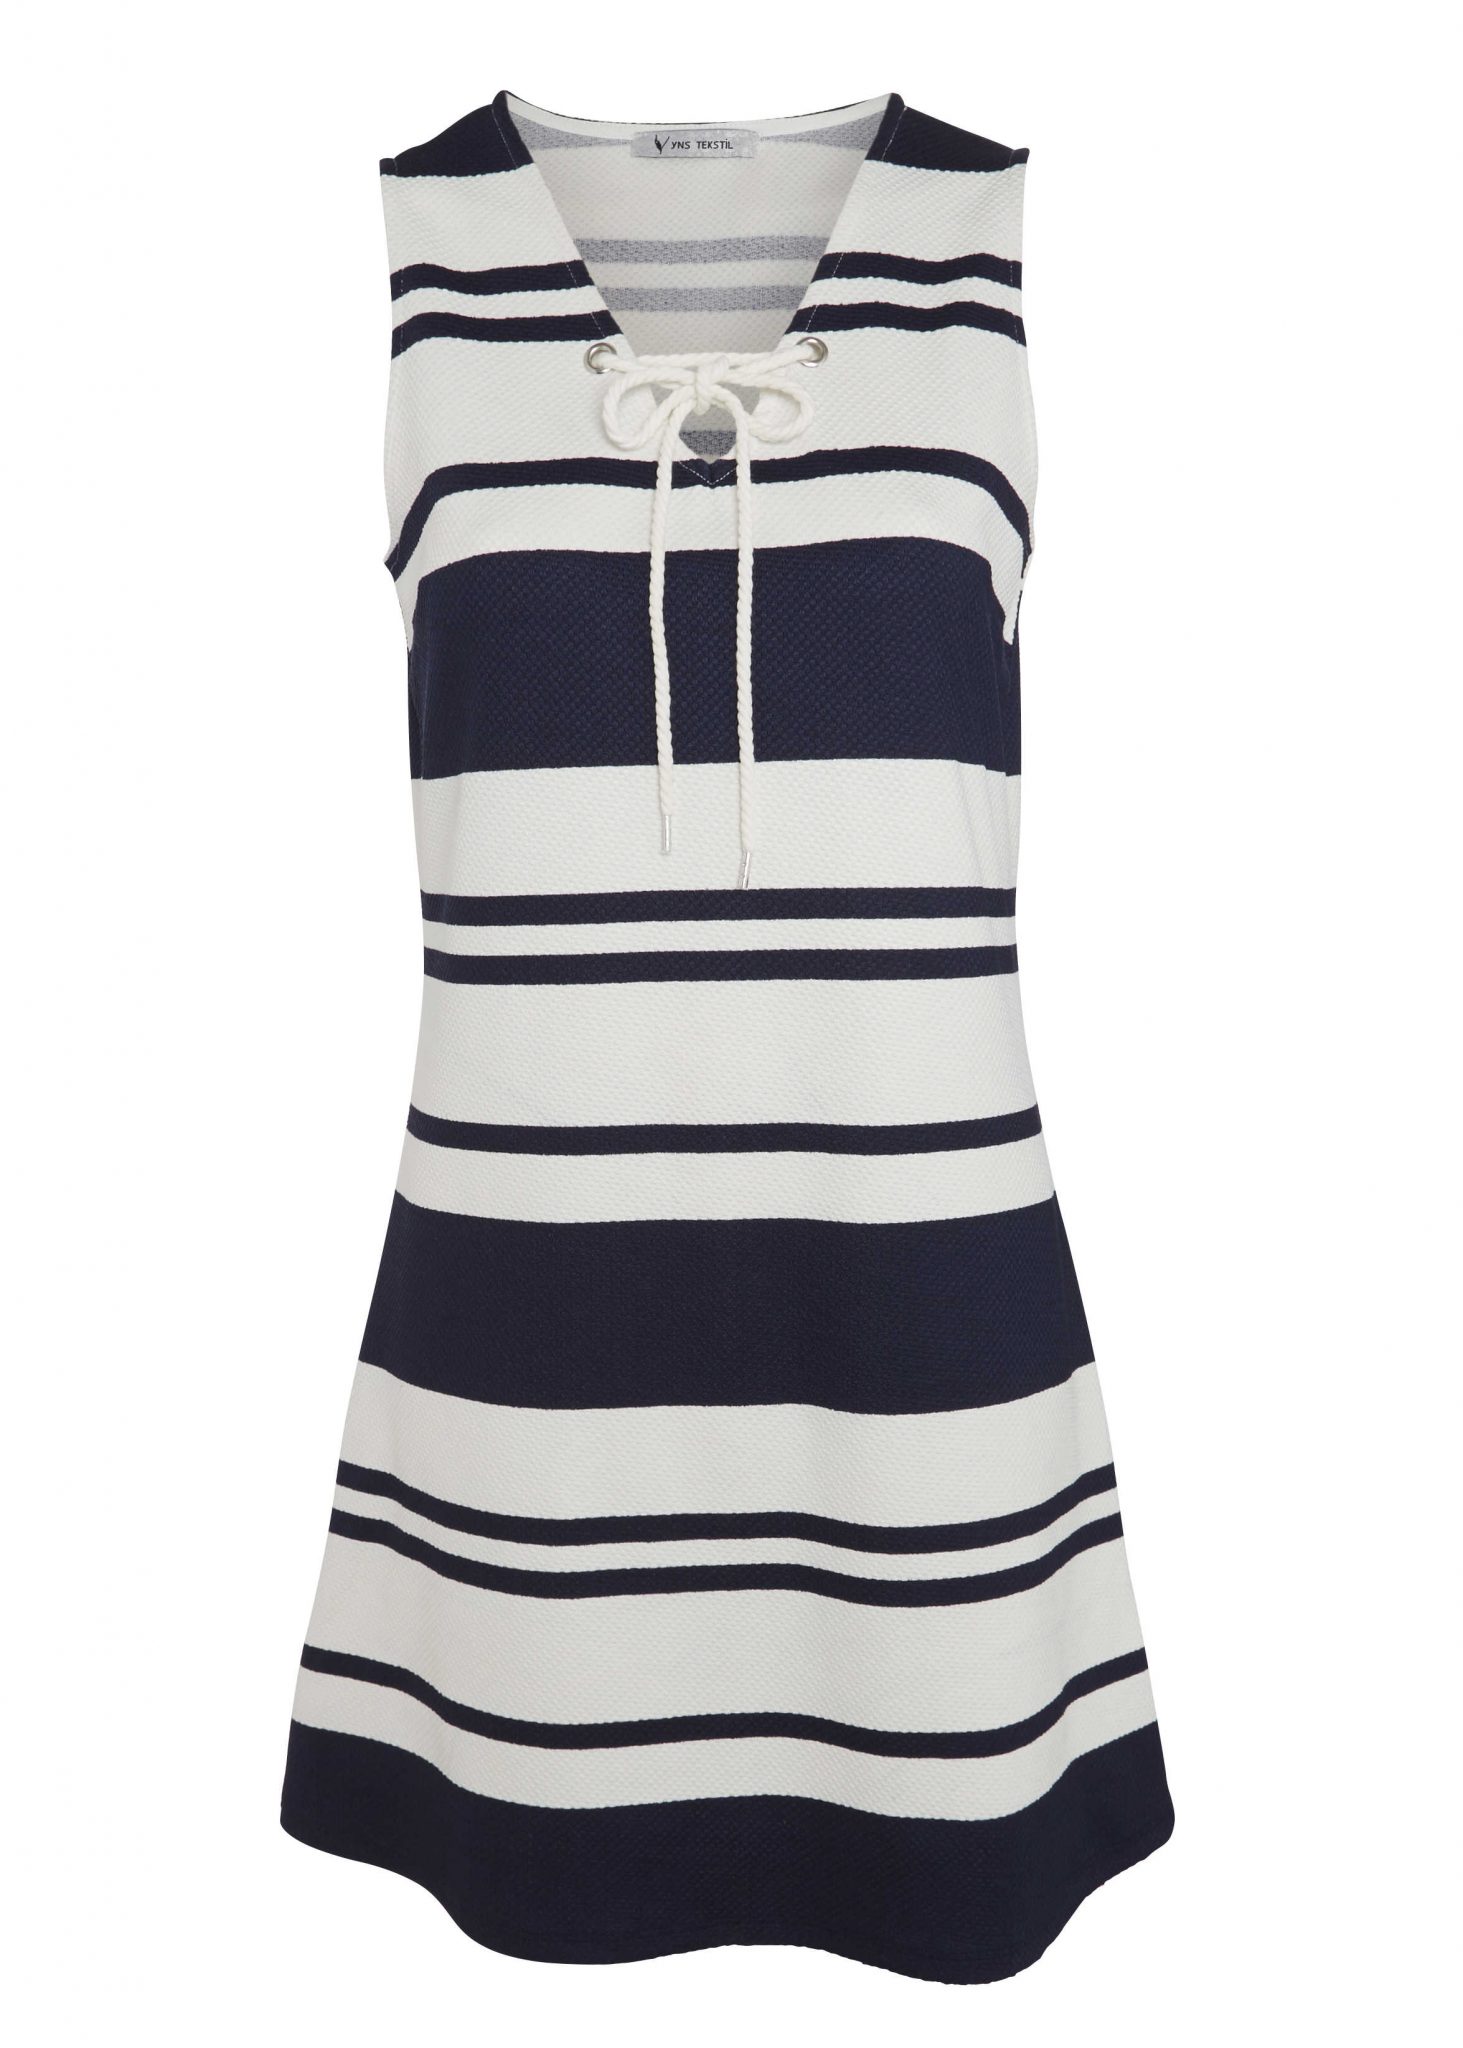 Nautical style stripe dress